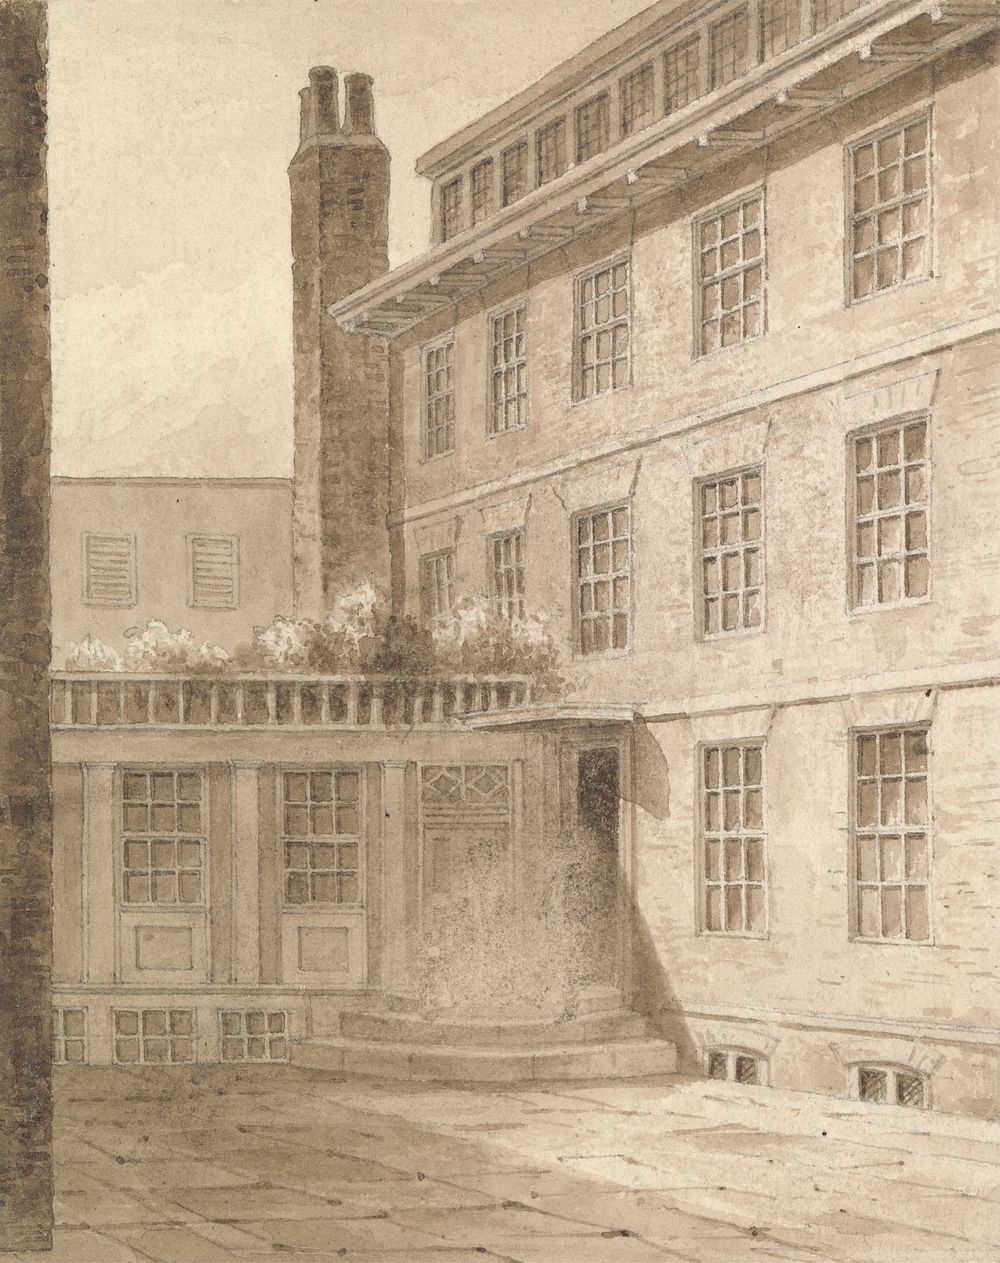 Dr. Johnson's House in 8 Bolt Court, Fleet Street by John Thomas Smith